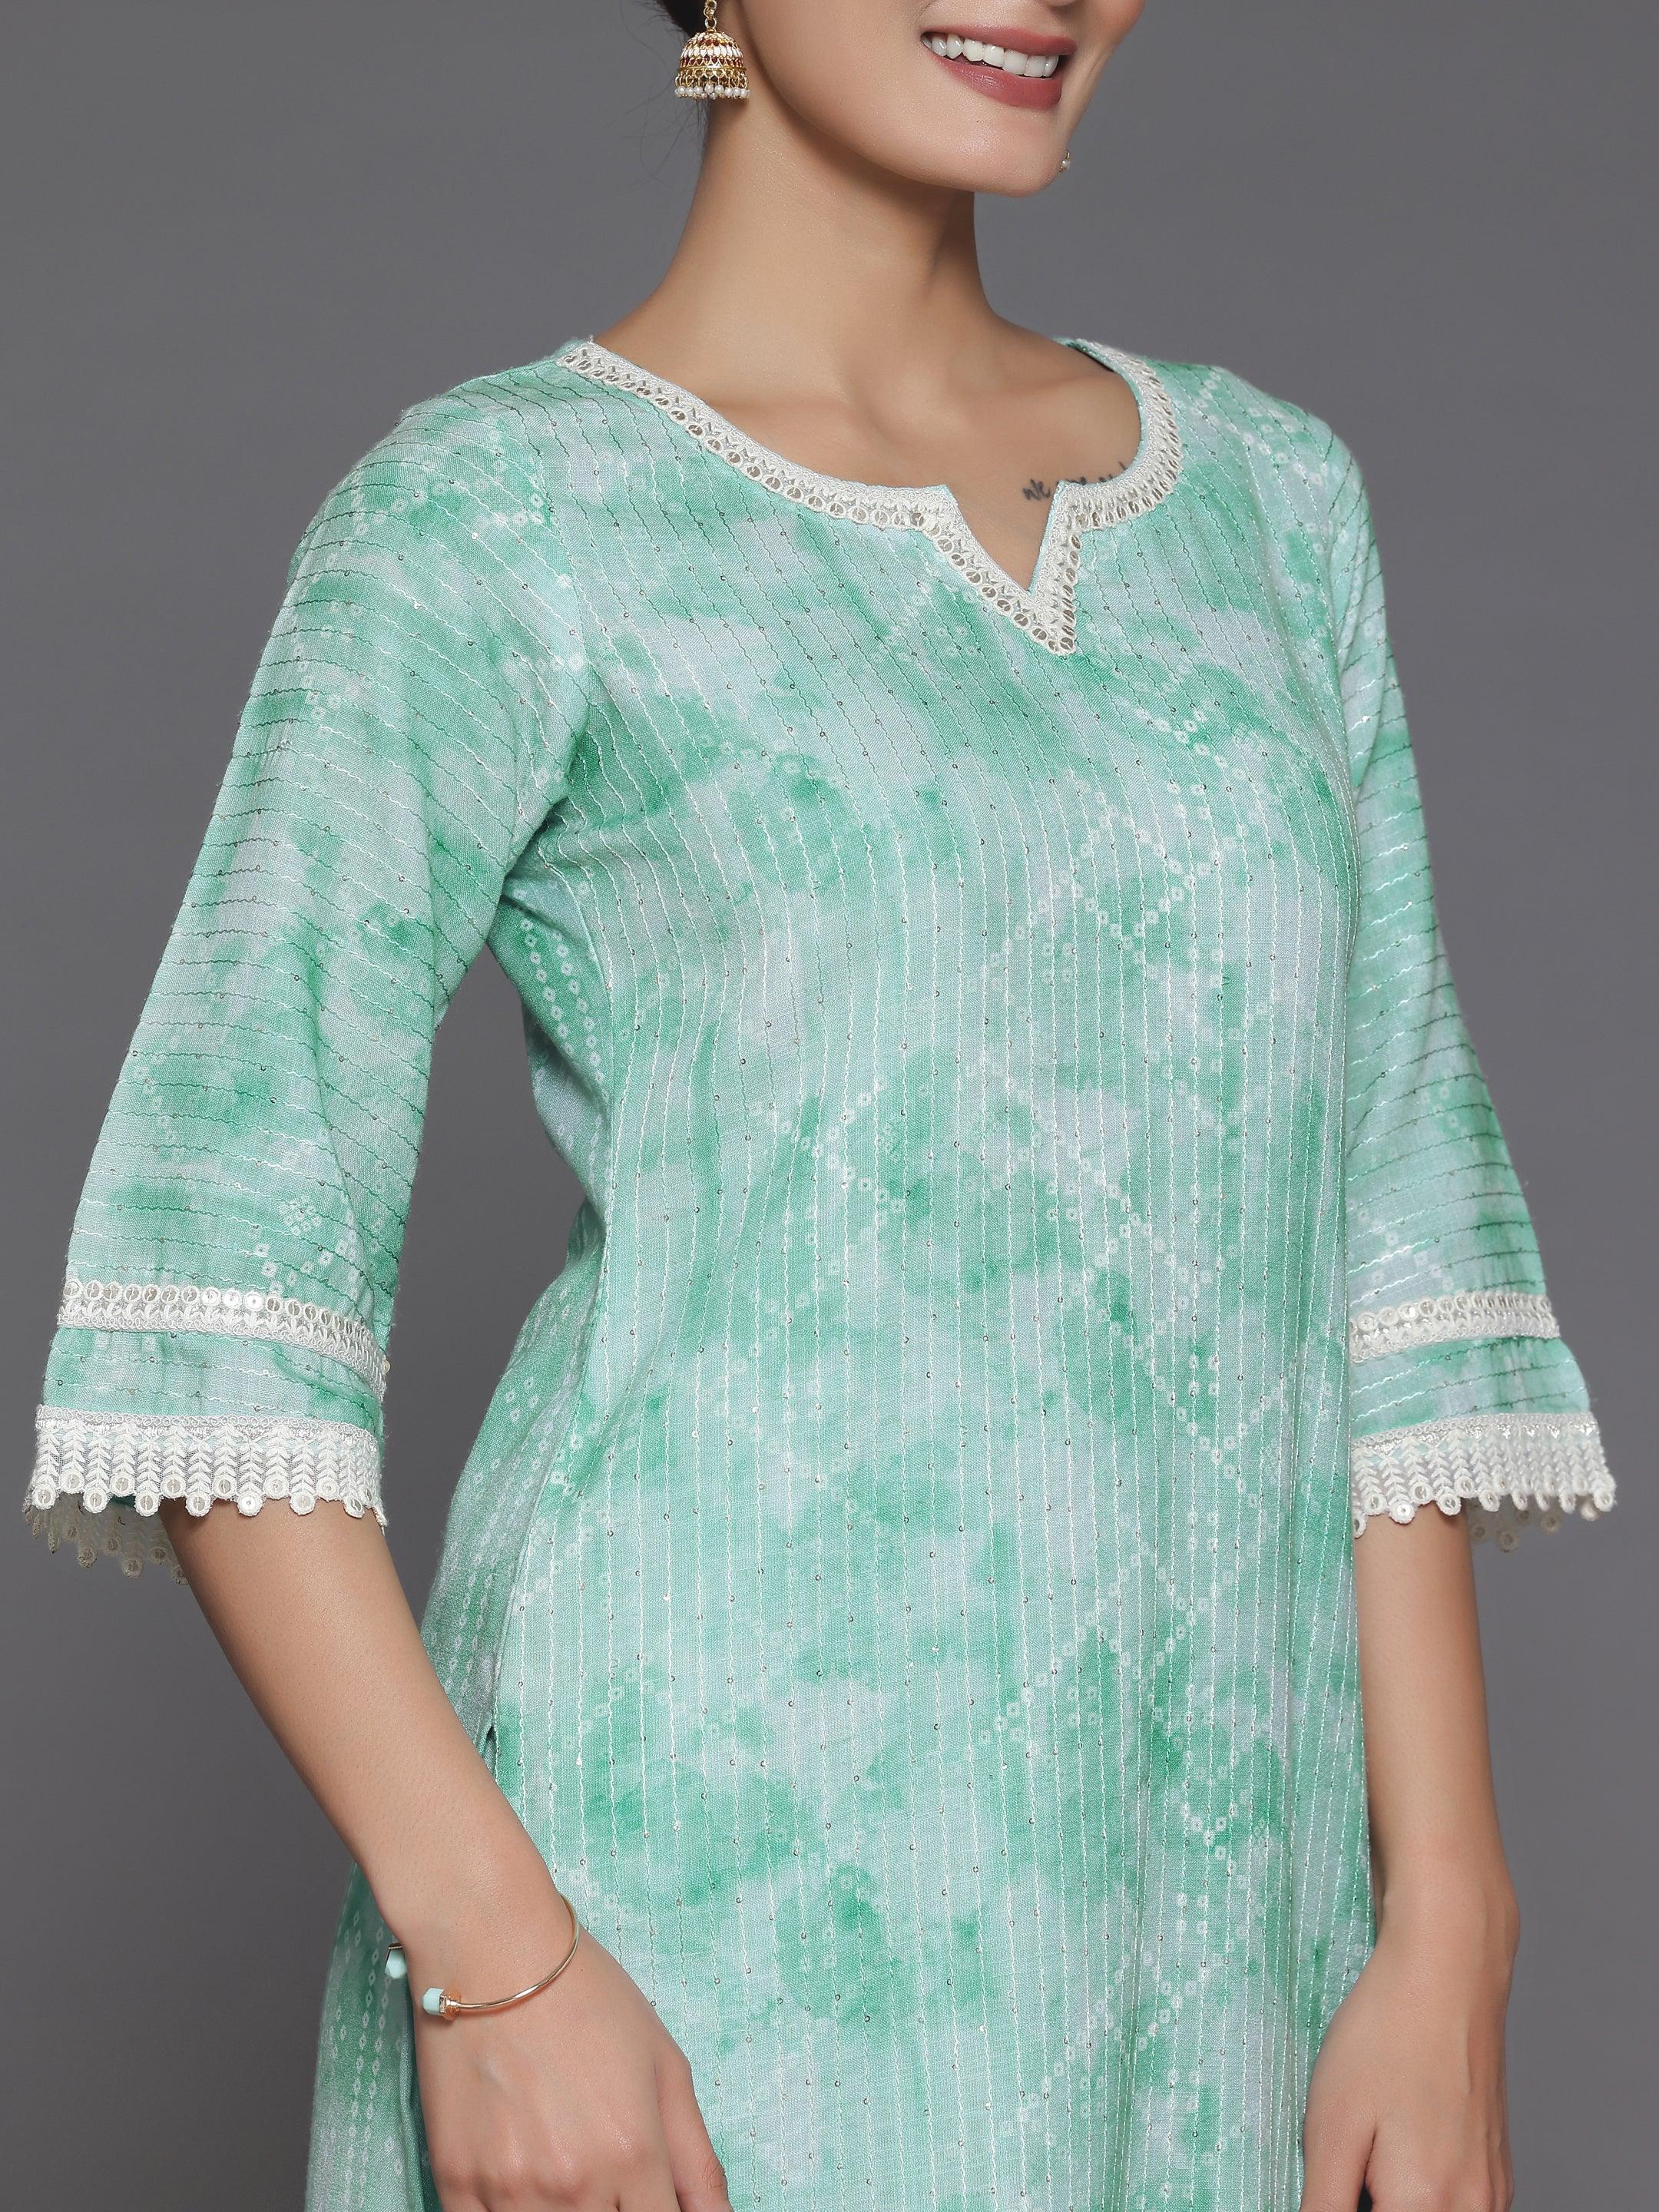 Green Printed Cotton Pakistani Suit